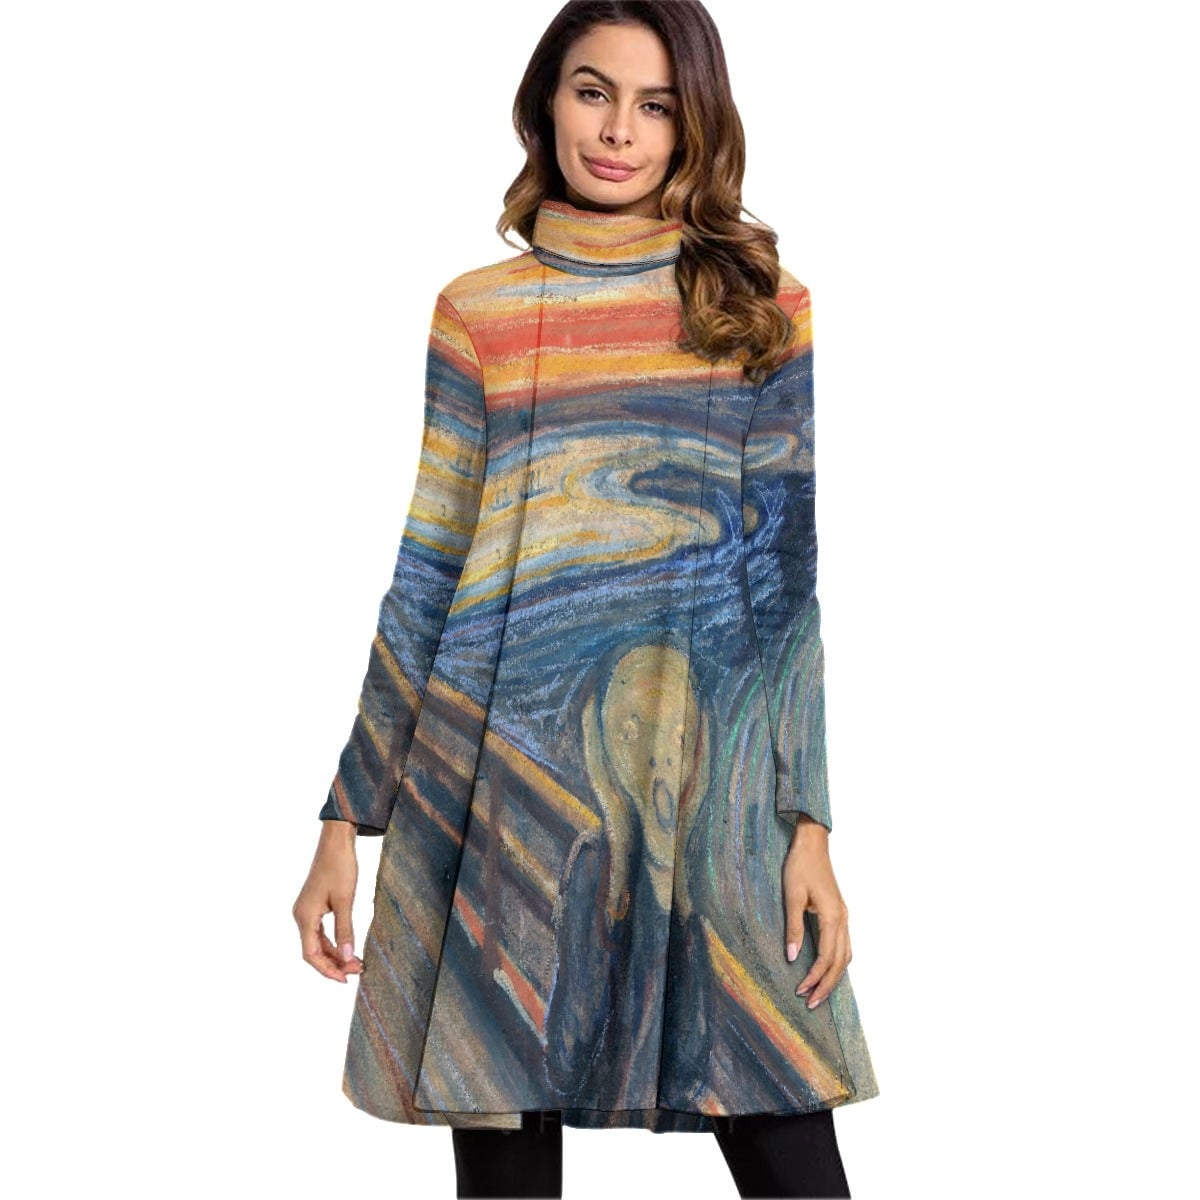 The Scream by Edvard Munch Painting Dress Long Sleeve